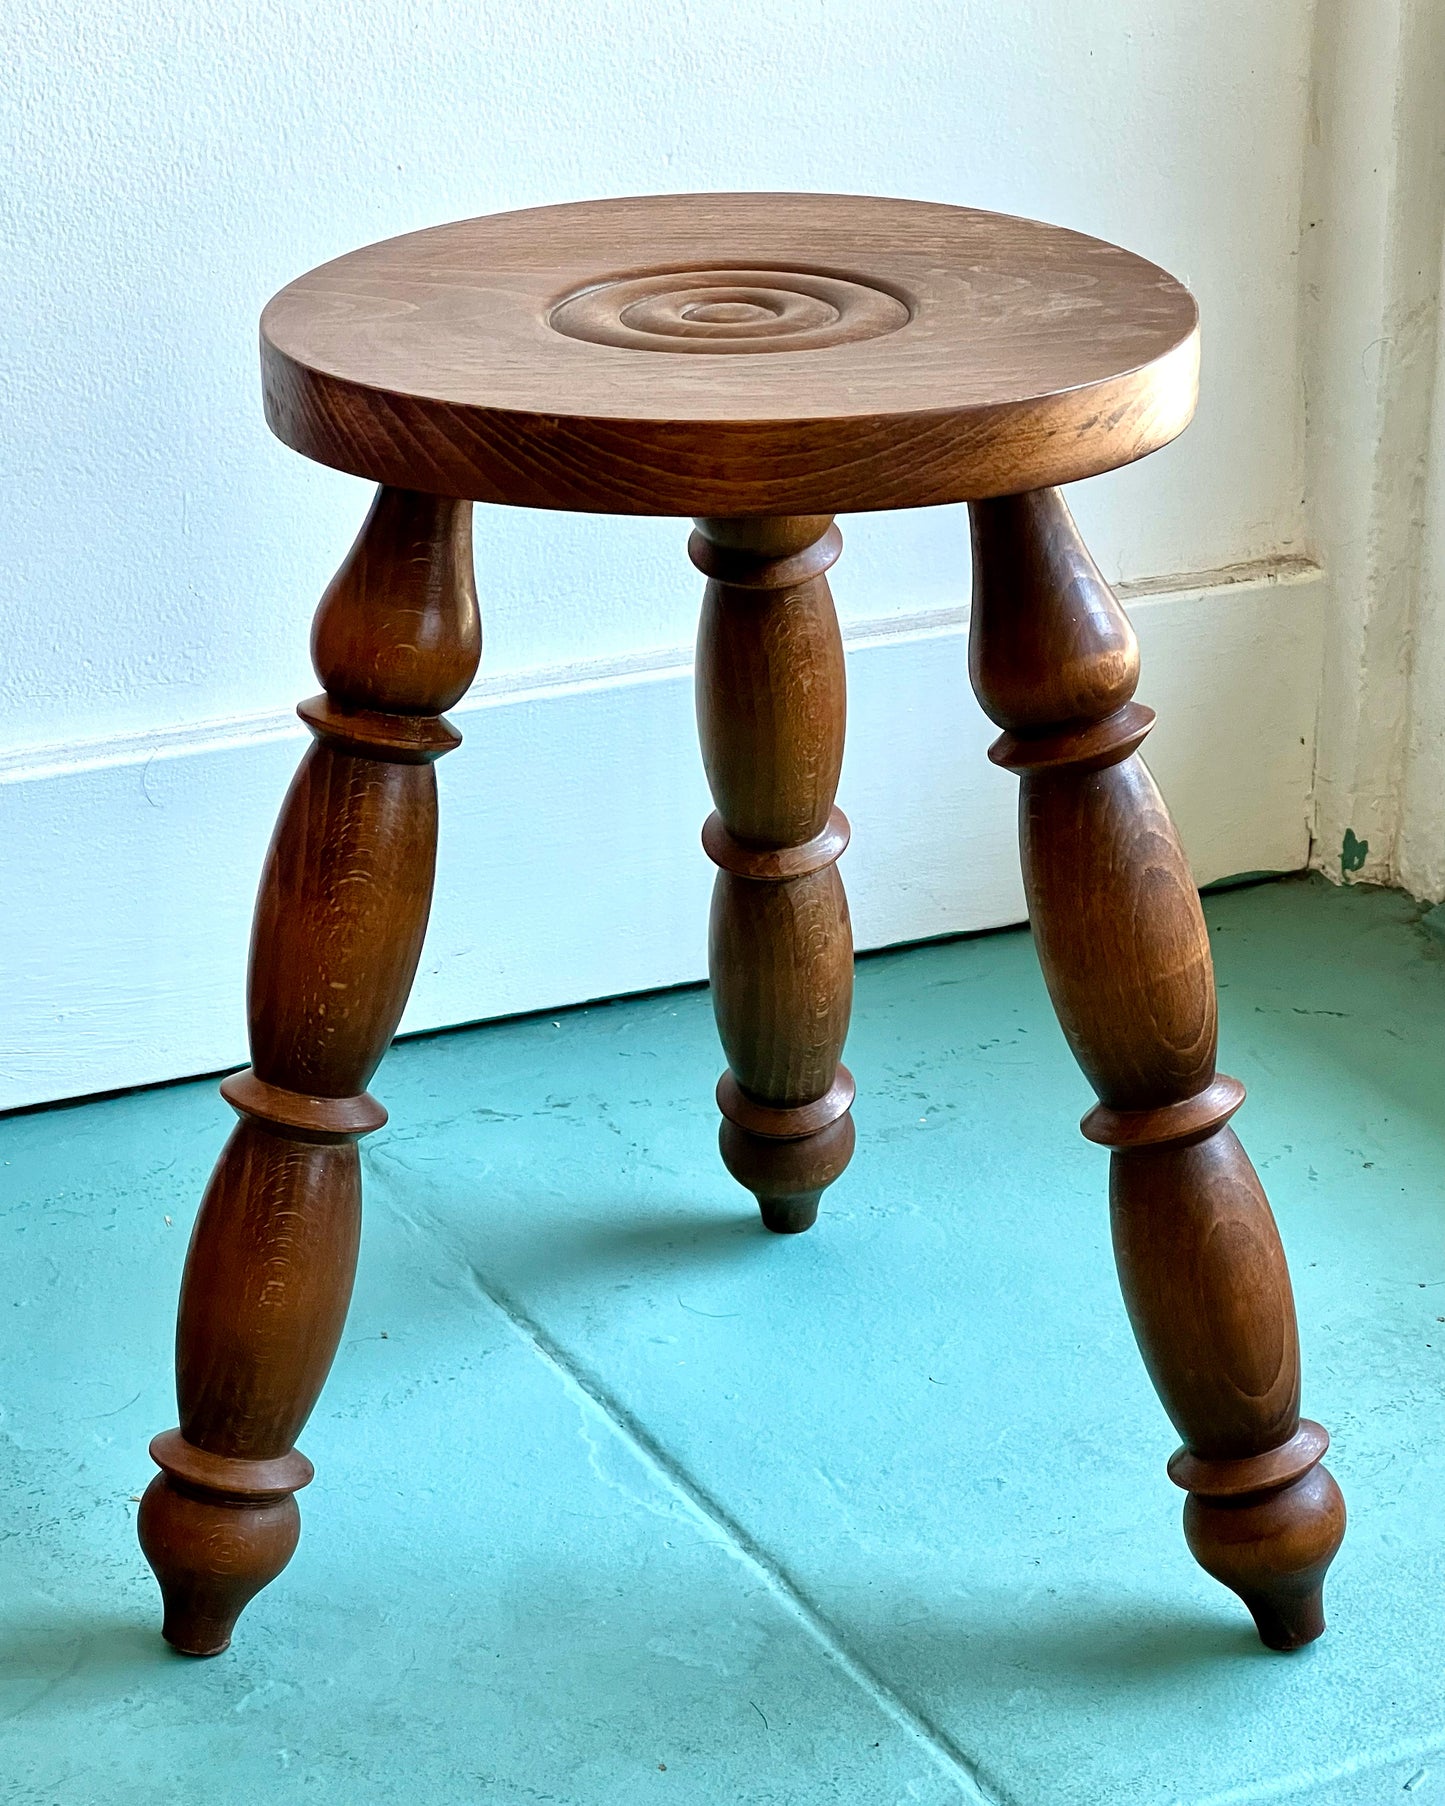 Vintage French tripod stool